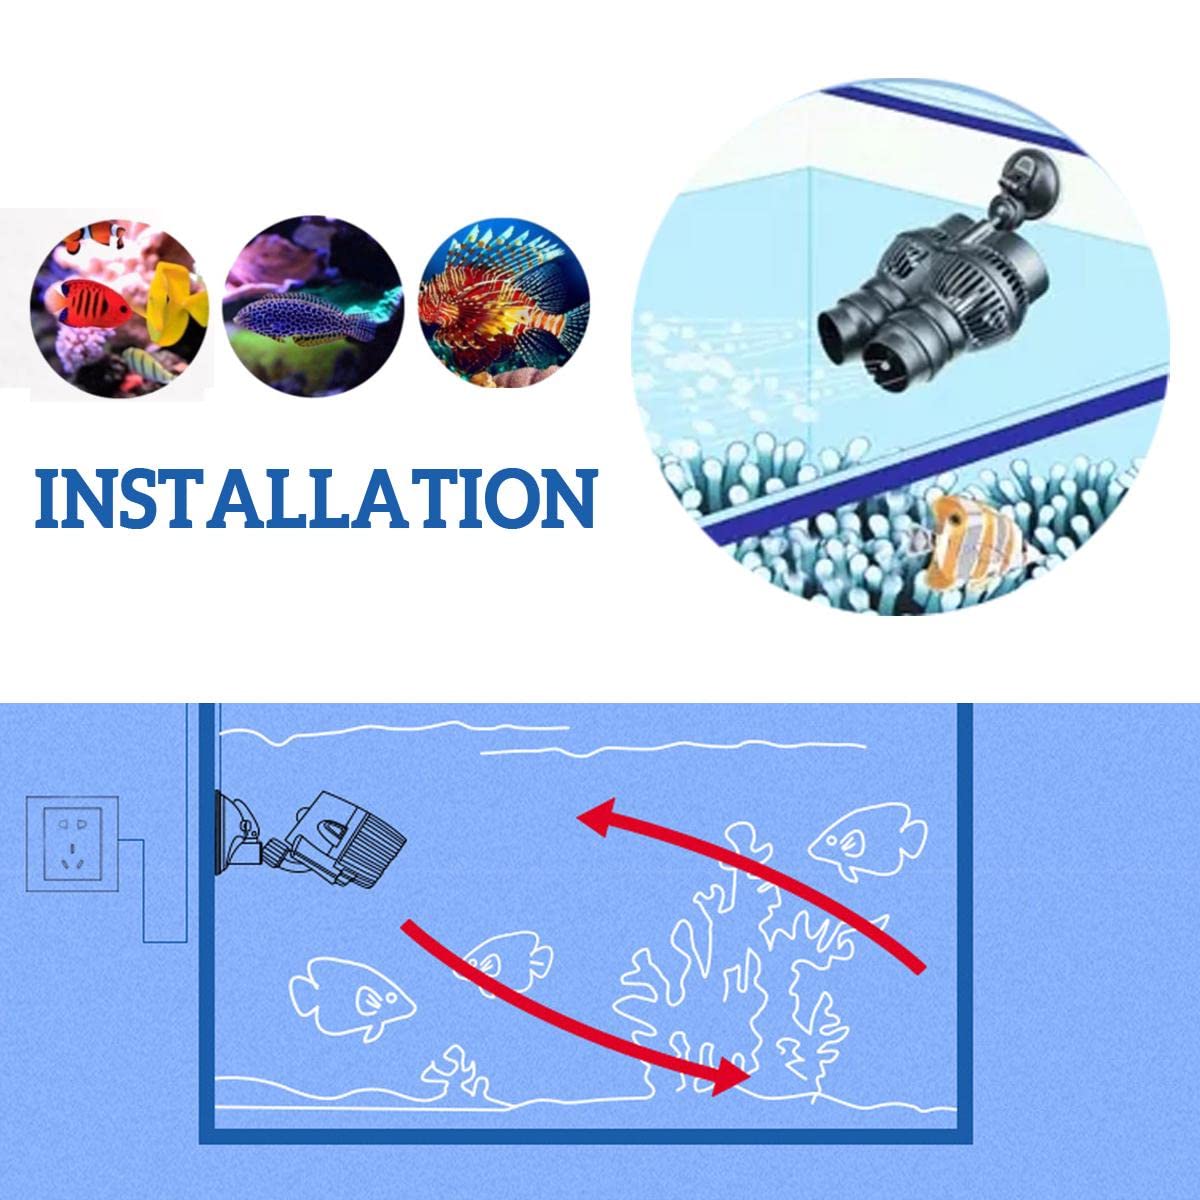 Sobo WP Series 360 Degree Flexible Rotation Single/Dual Powerhead Aquarium Super Wave Maker For Fresh & Marine Water Fish Tank